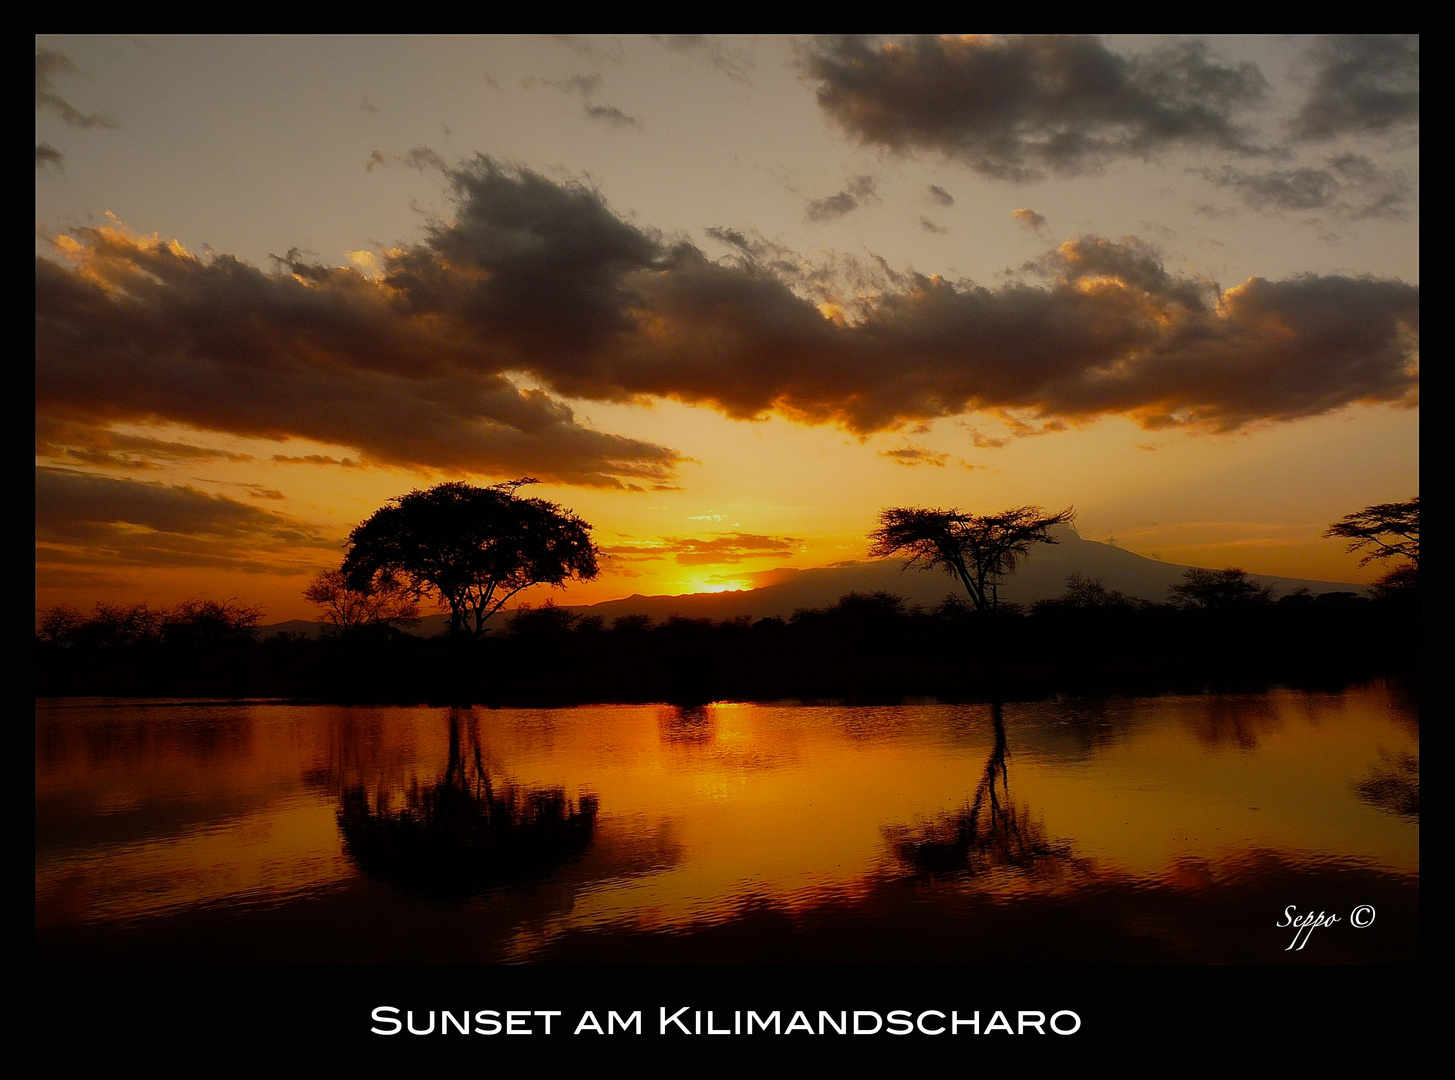 Sunset am Kilimandscharo